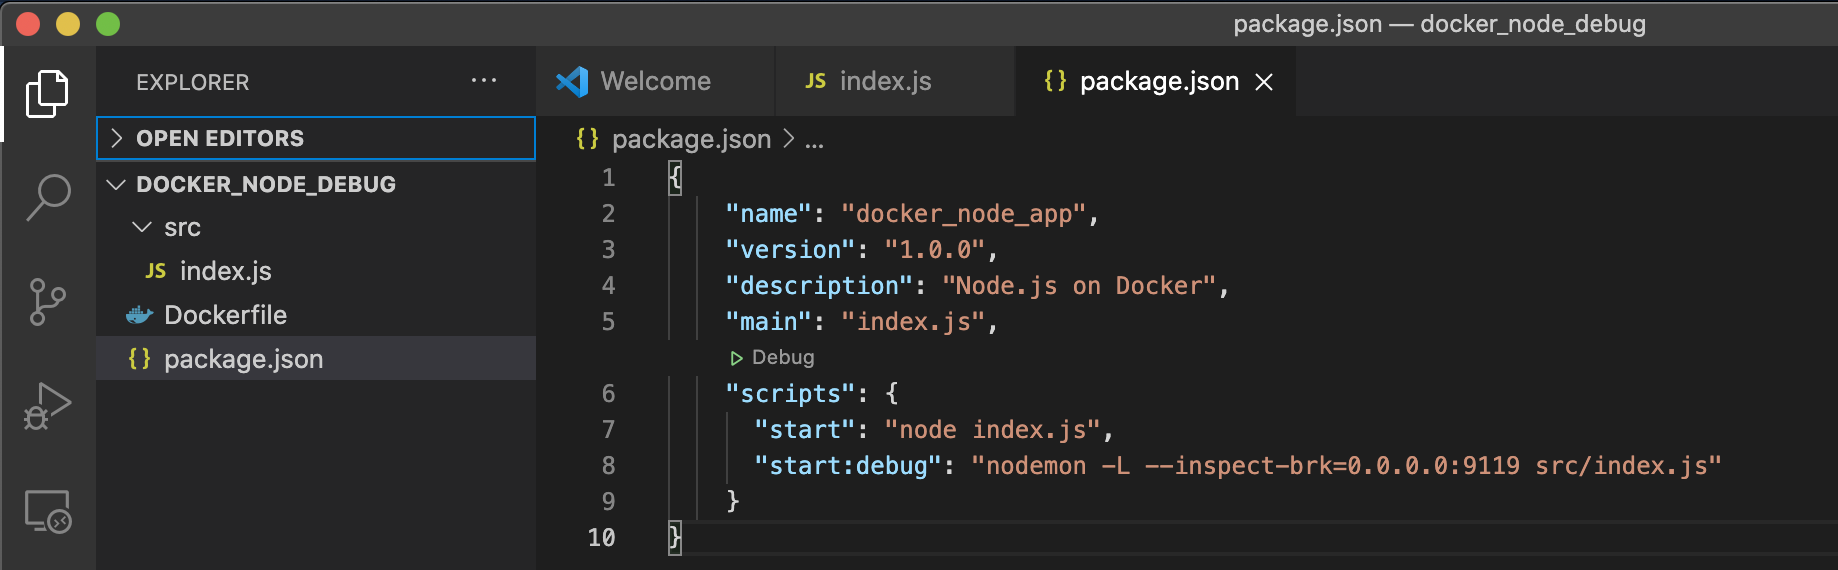 Docker Node.js package.json